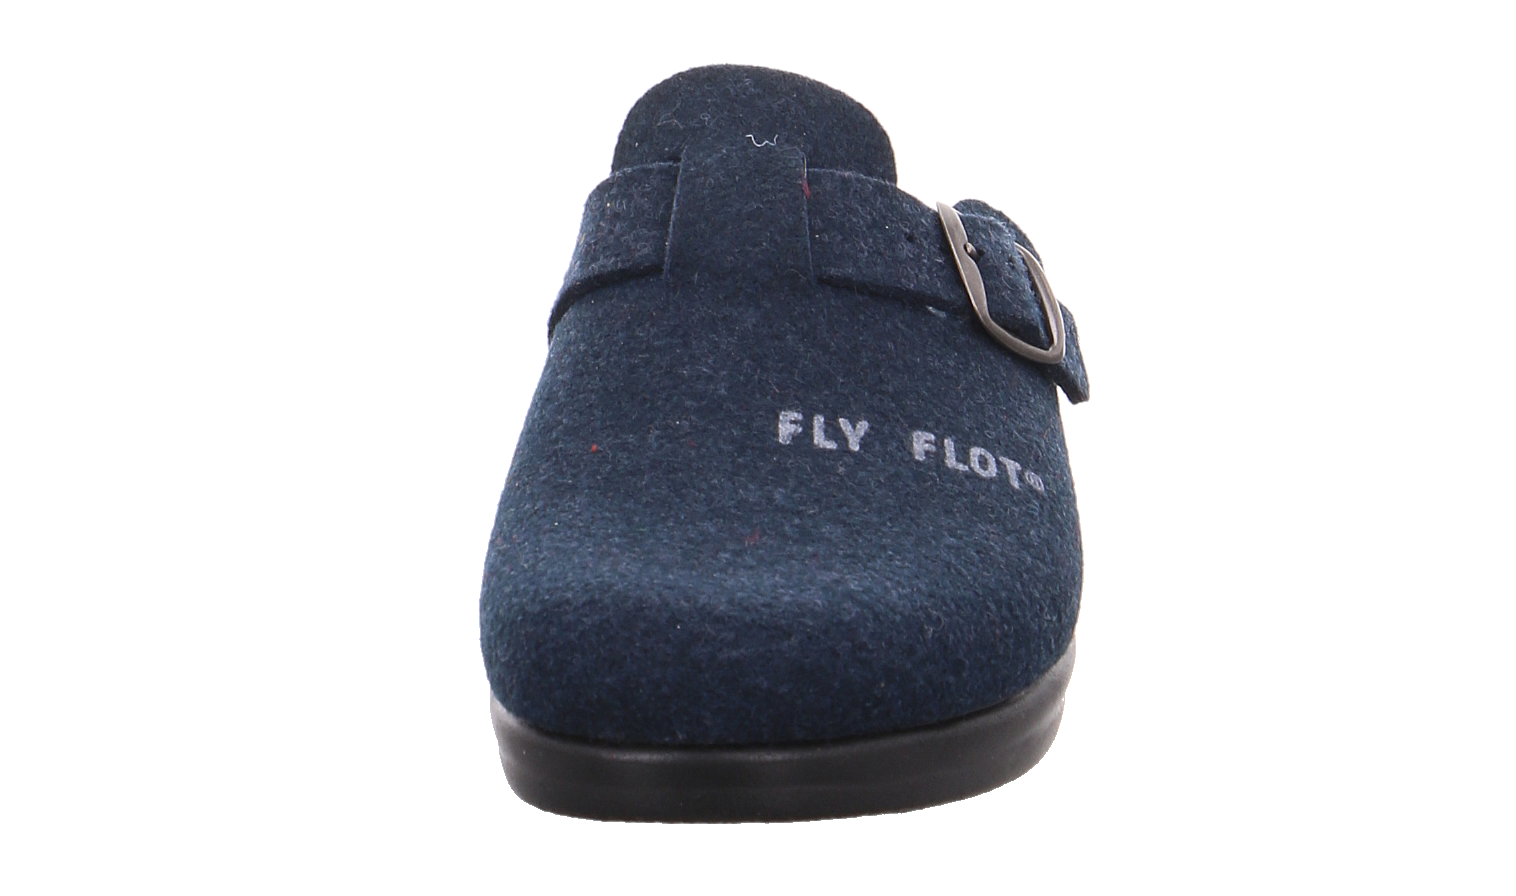 Fly Flot Clog blau Bild16